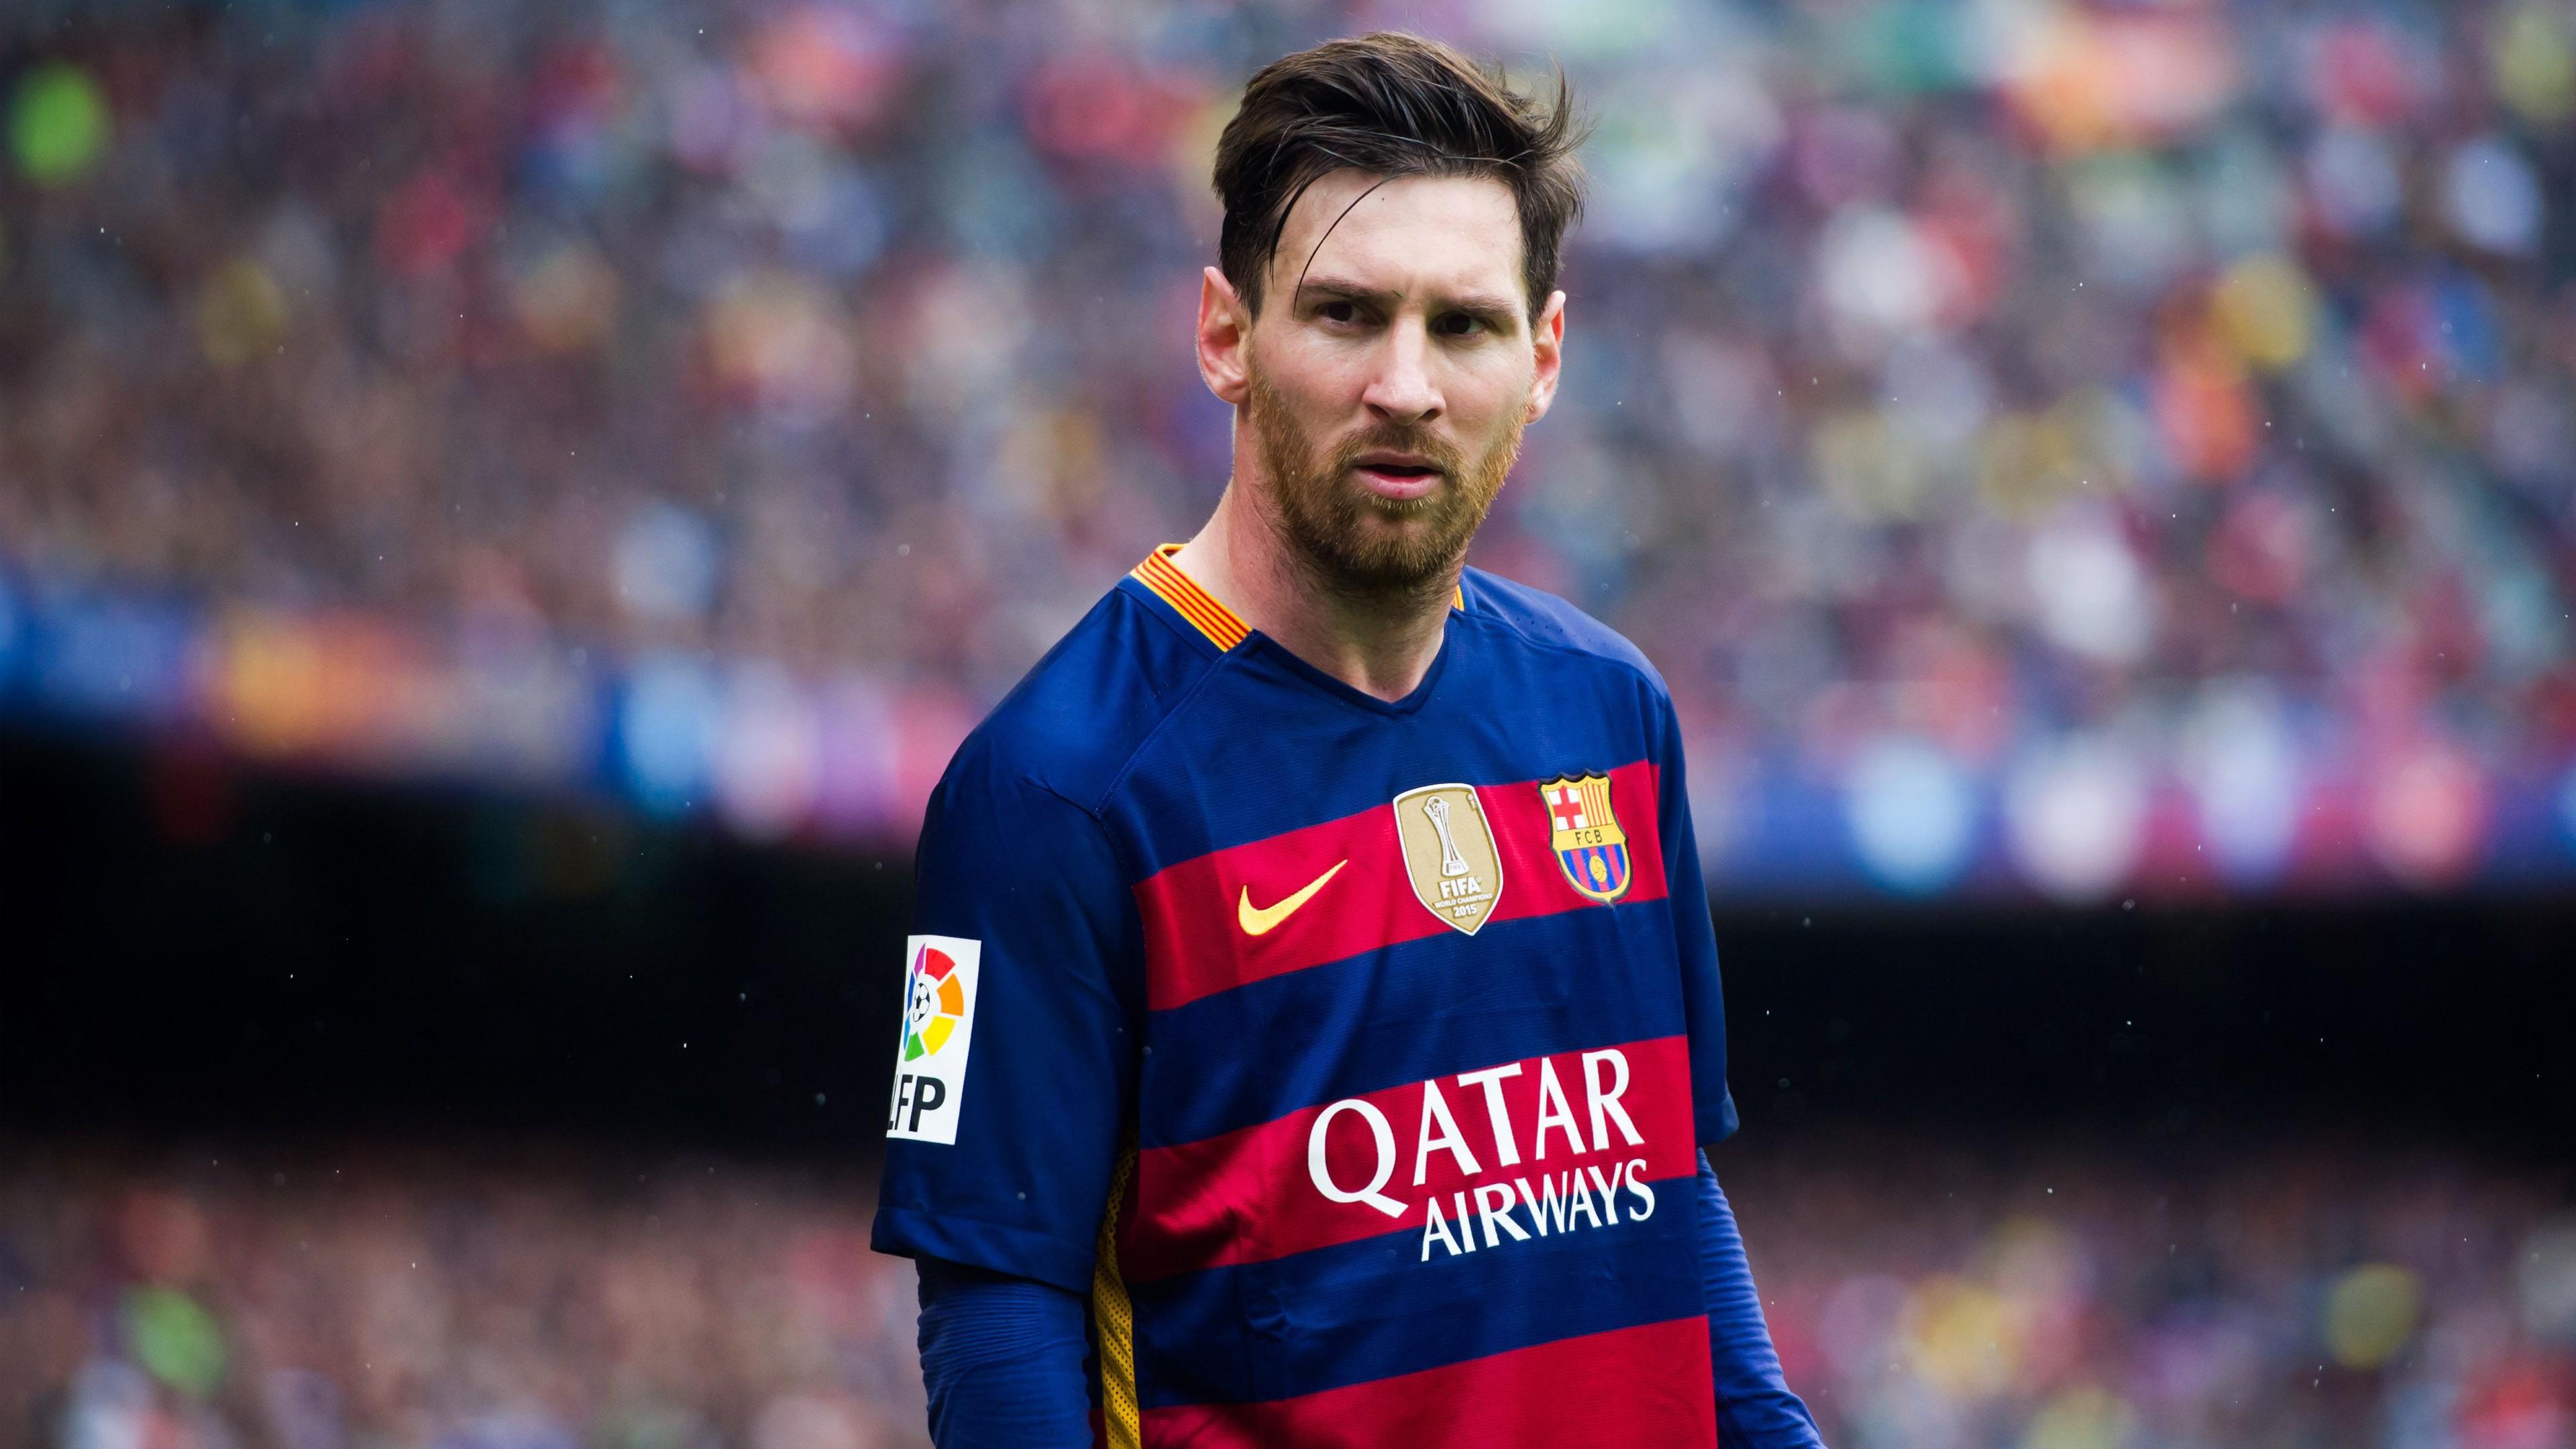 3840 x 2160 · jpeg - Lionel Messi Fc Barcelona Best HD Image - Download hd wallpapers